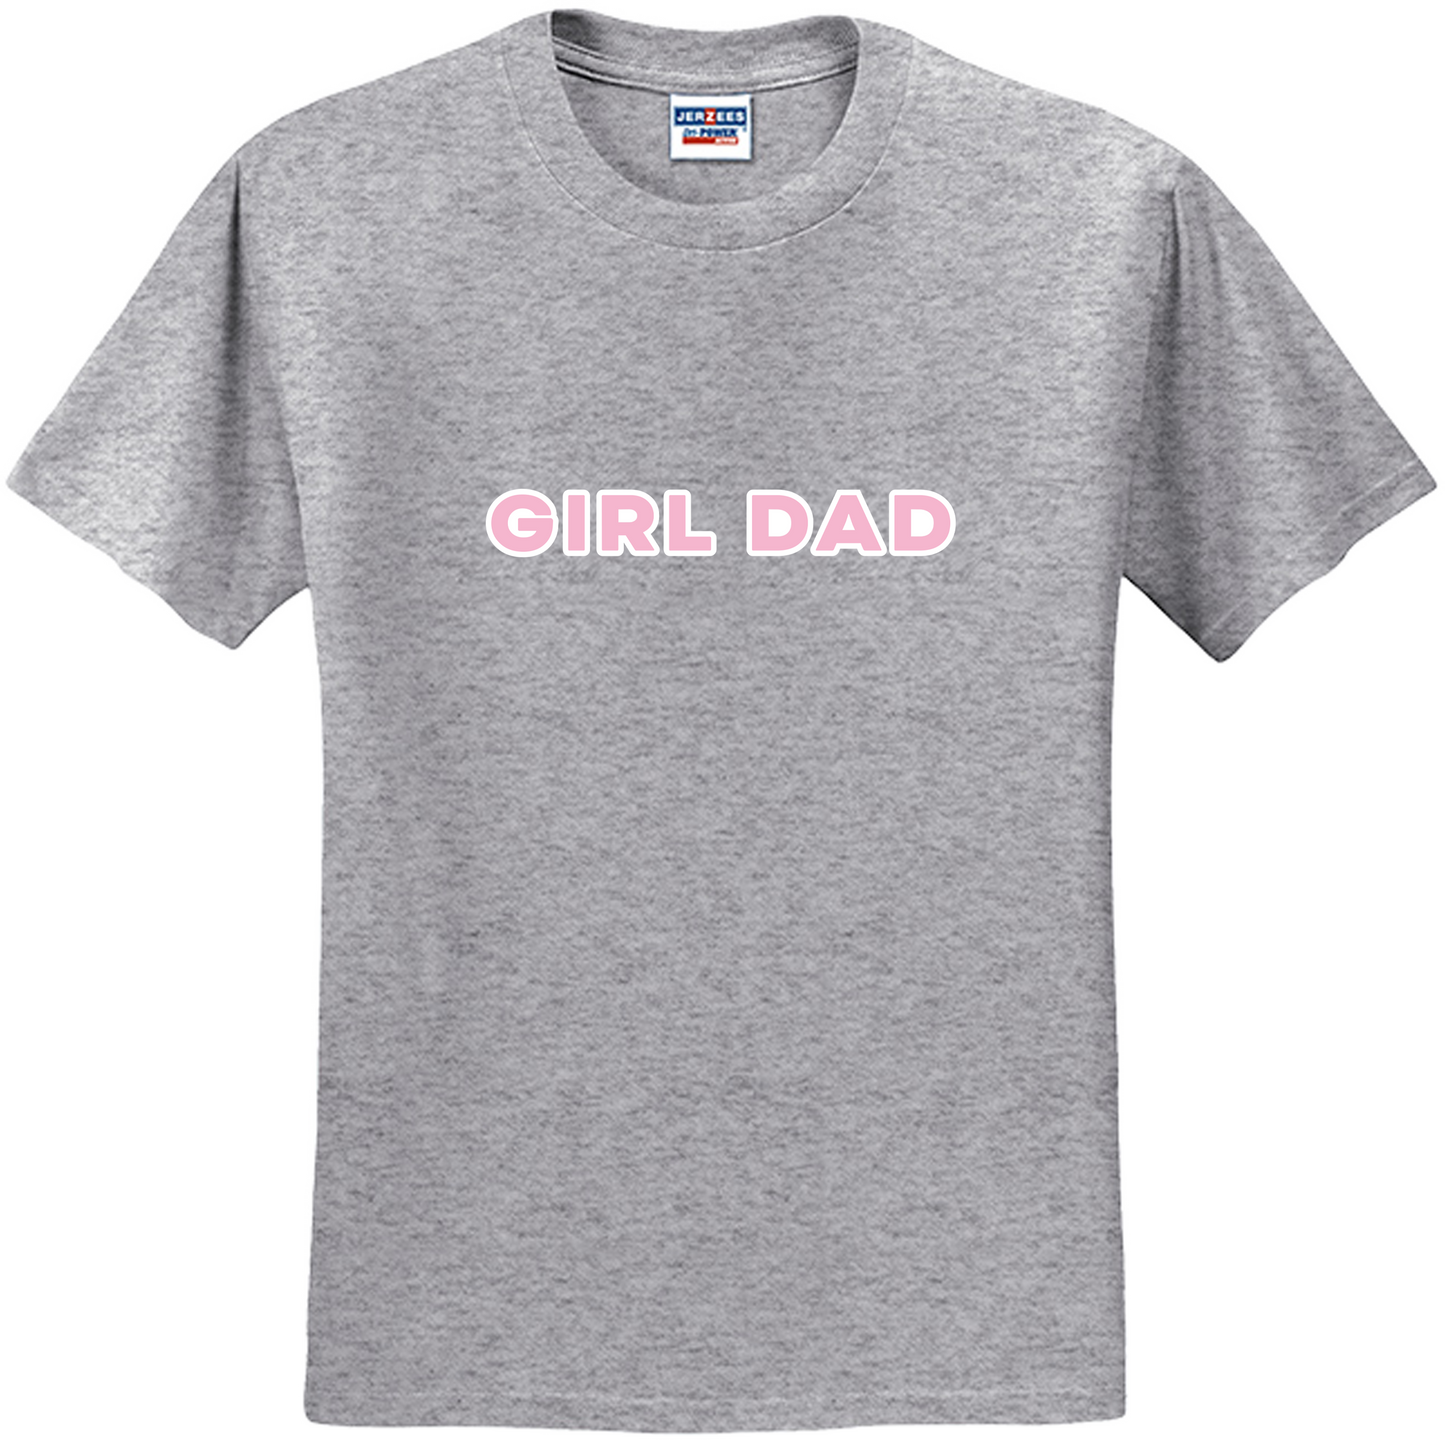 Indie Chicas "Girl Dad" Tee [Adult/Unisex]